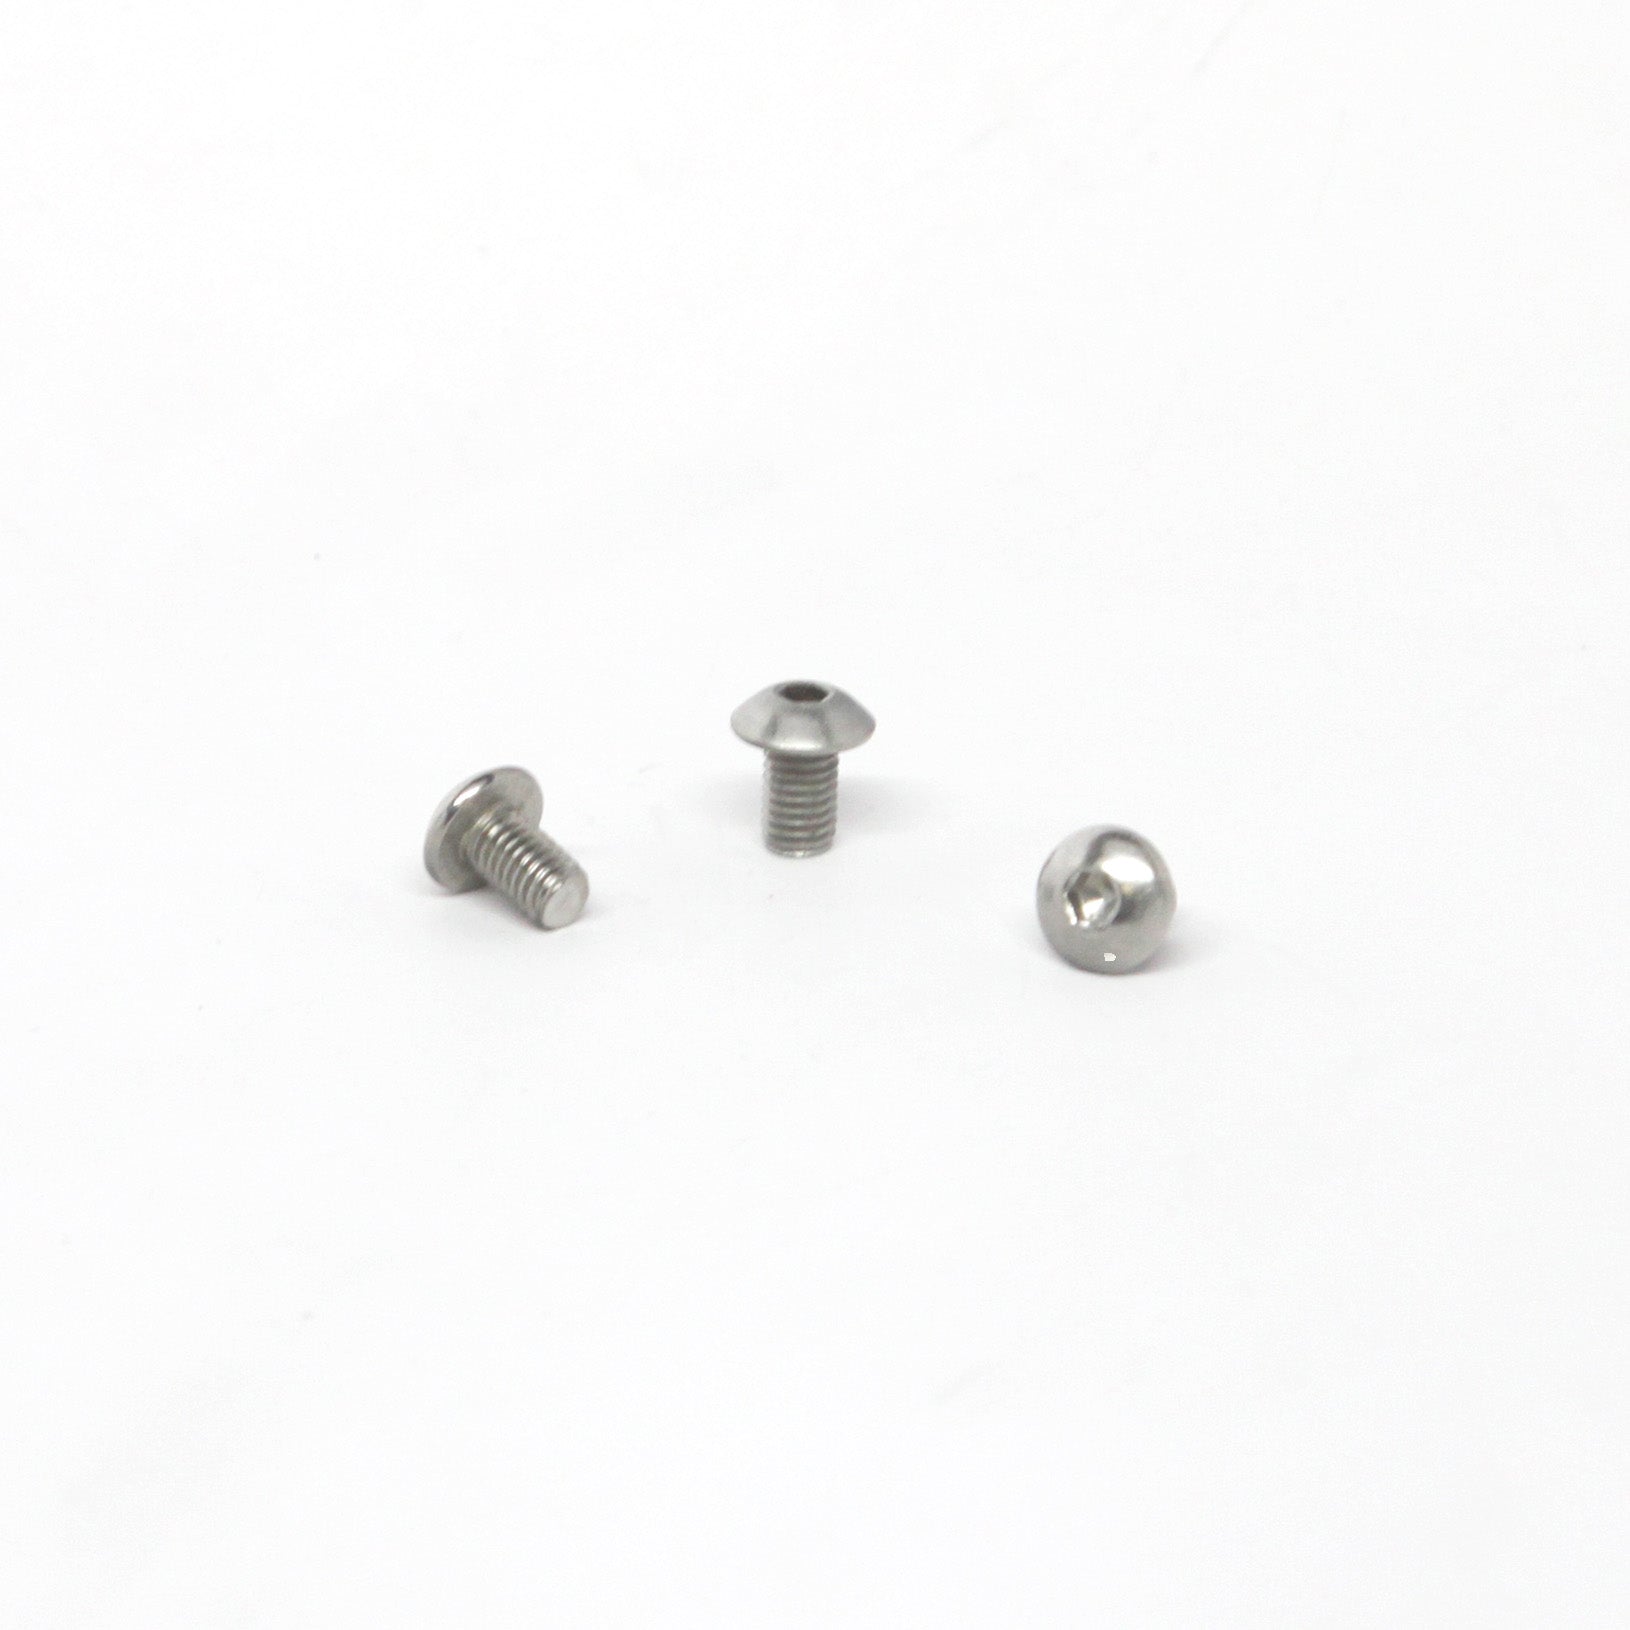 P2032 - M4-.7 x 8 Button Head Socket Cap Screw for Intersan/AquaDesign